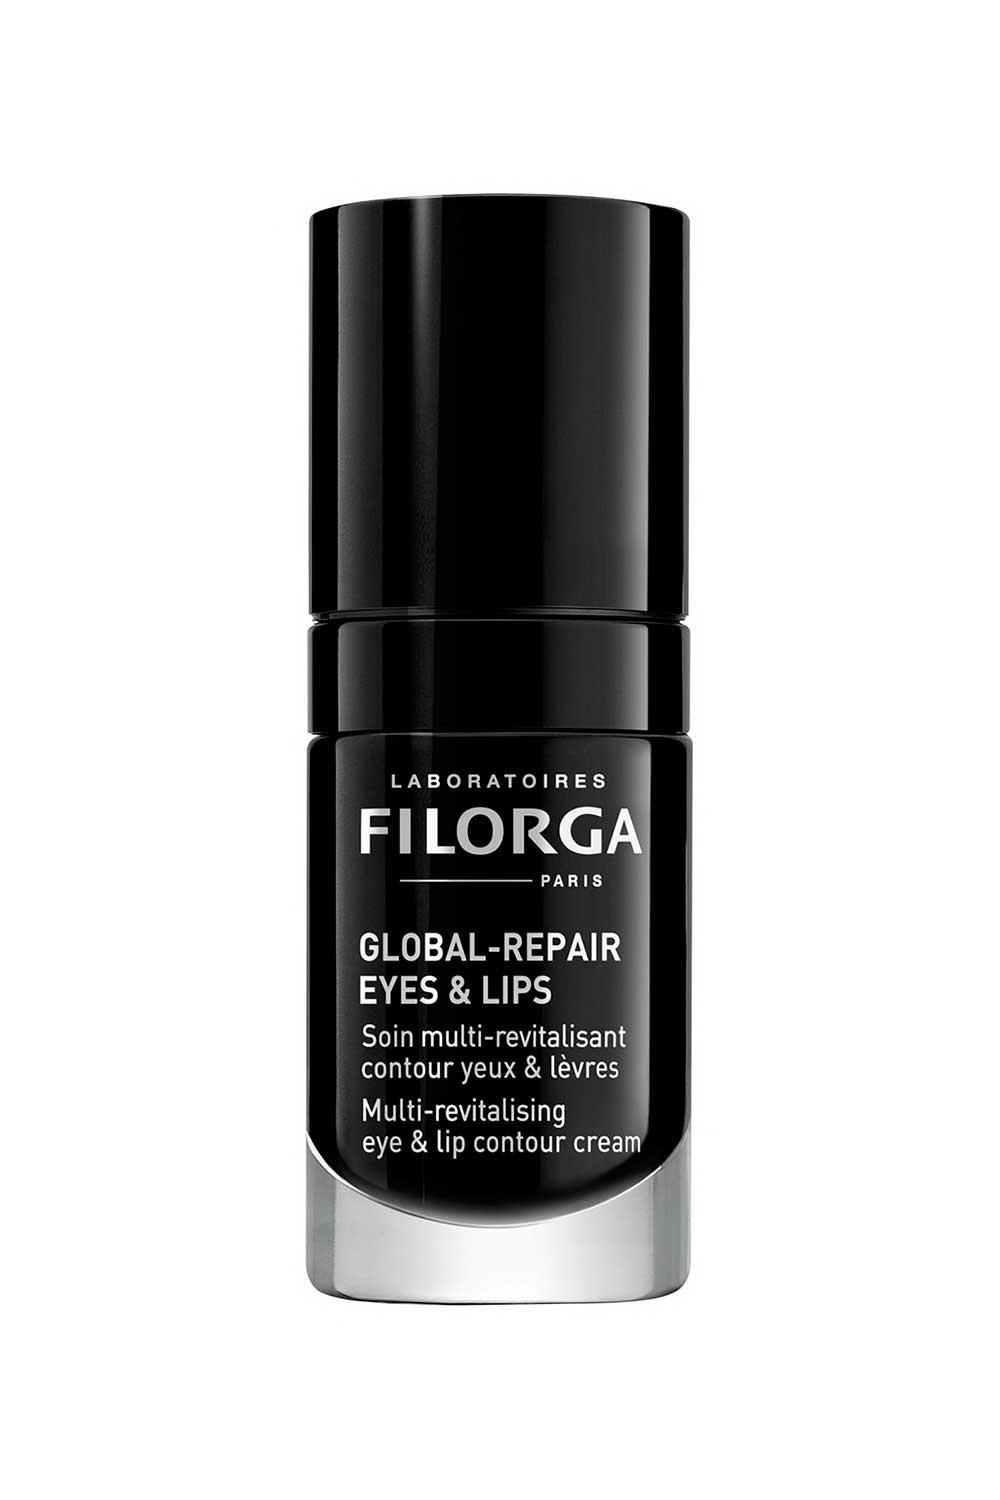 Global-Repair Eyes & Lips, Filorga